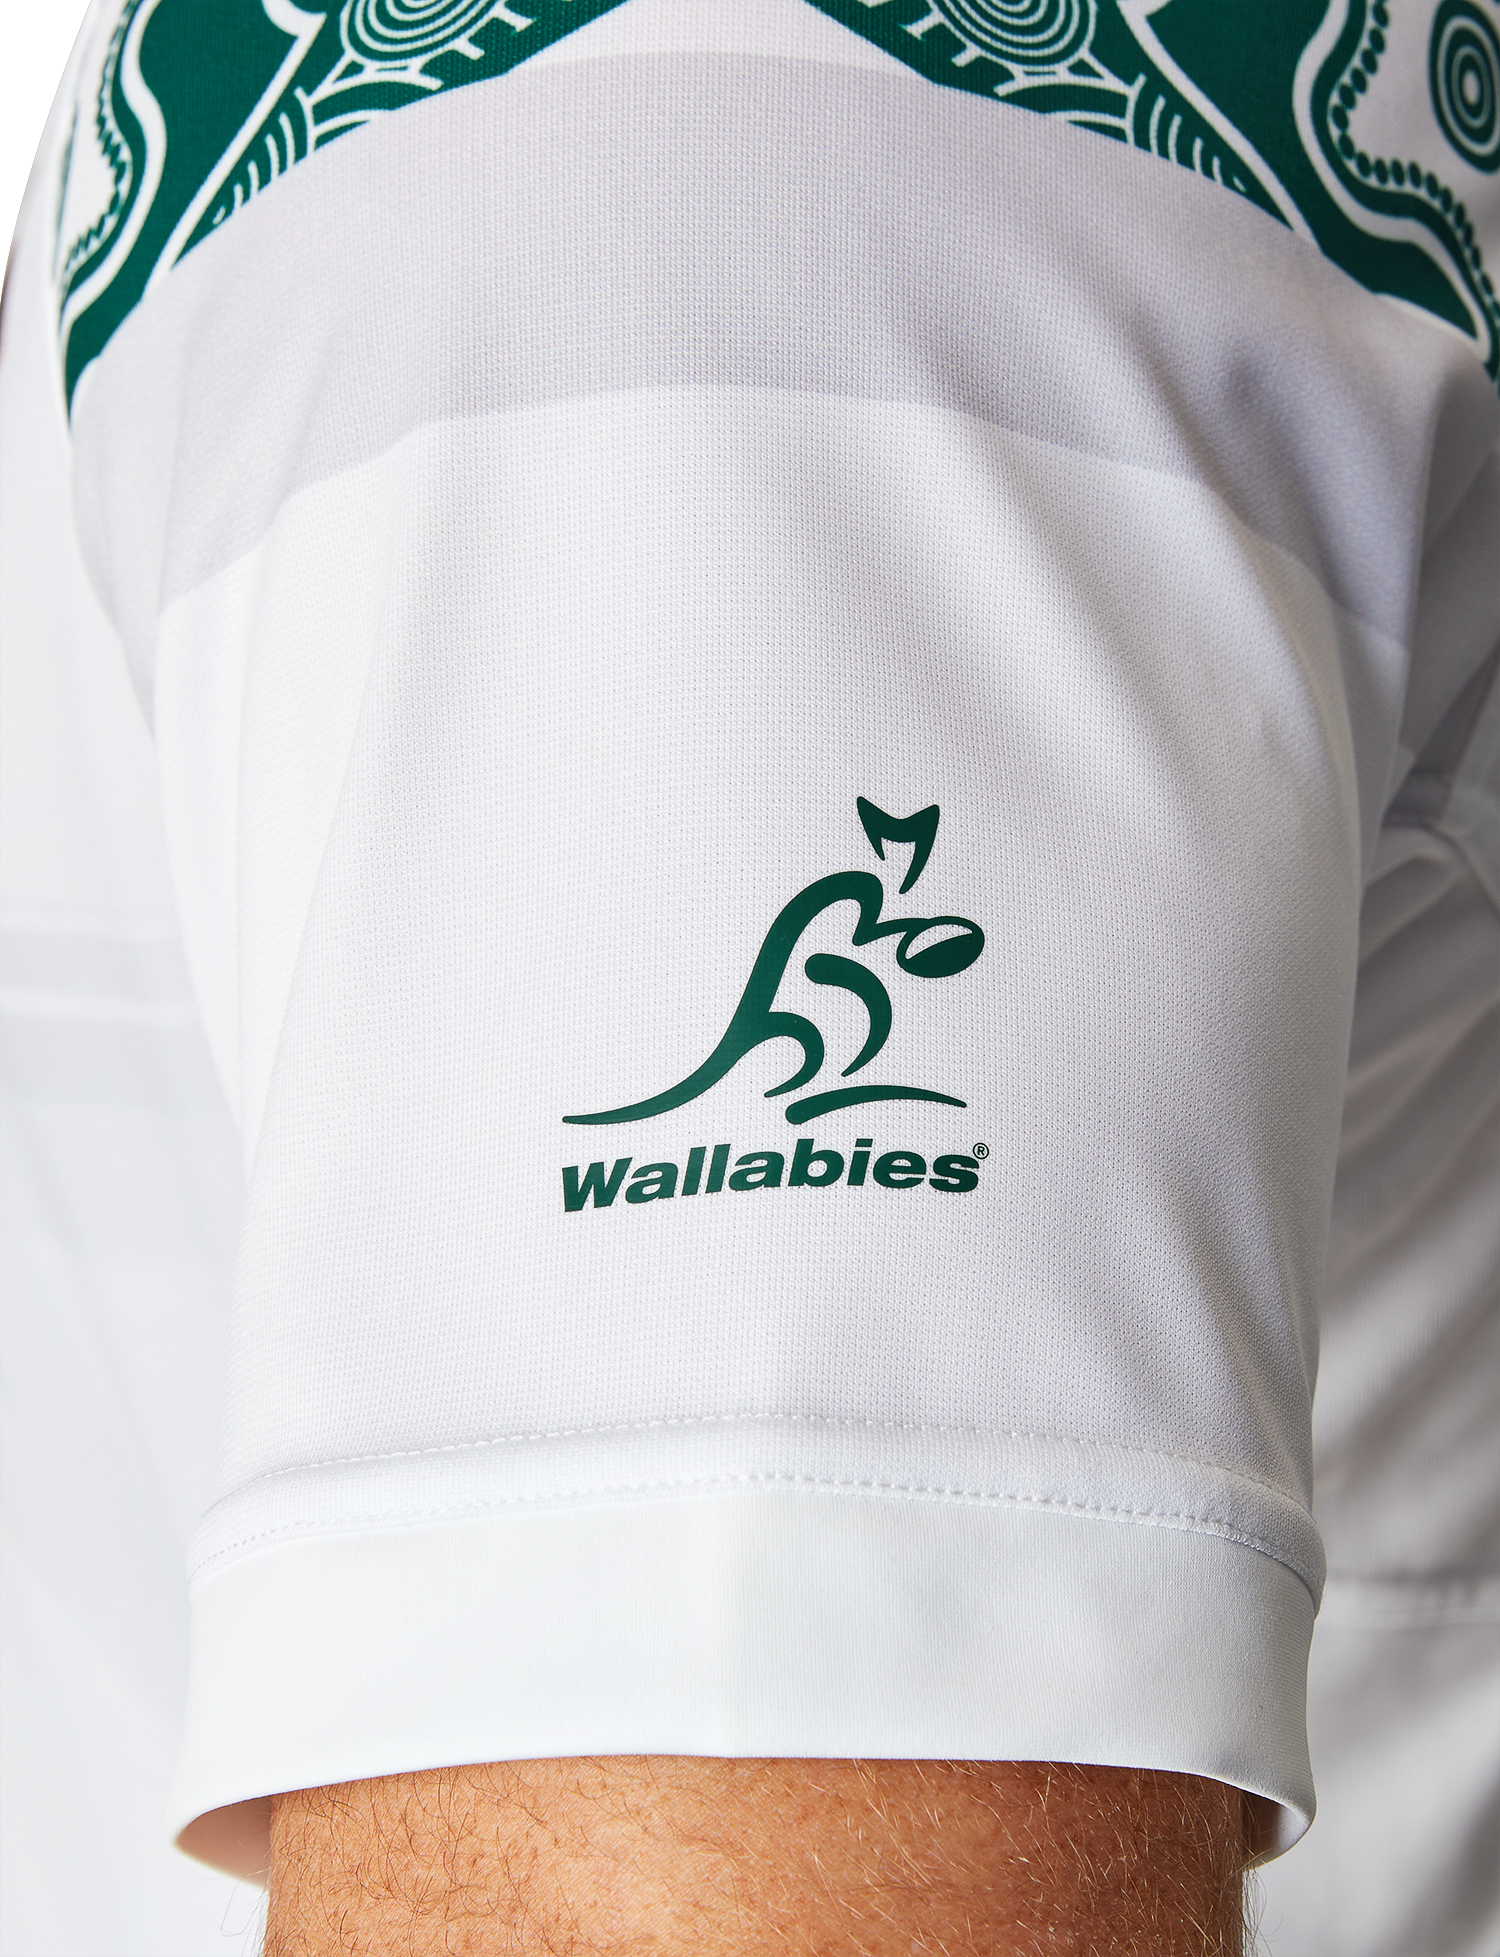 Wallabies RWC Rep Alternate Jersey 2023 - The Rugby Shop Darwin